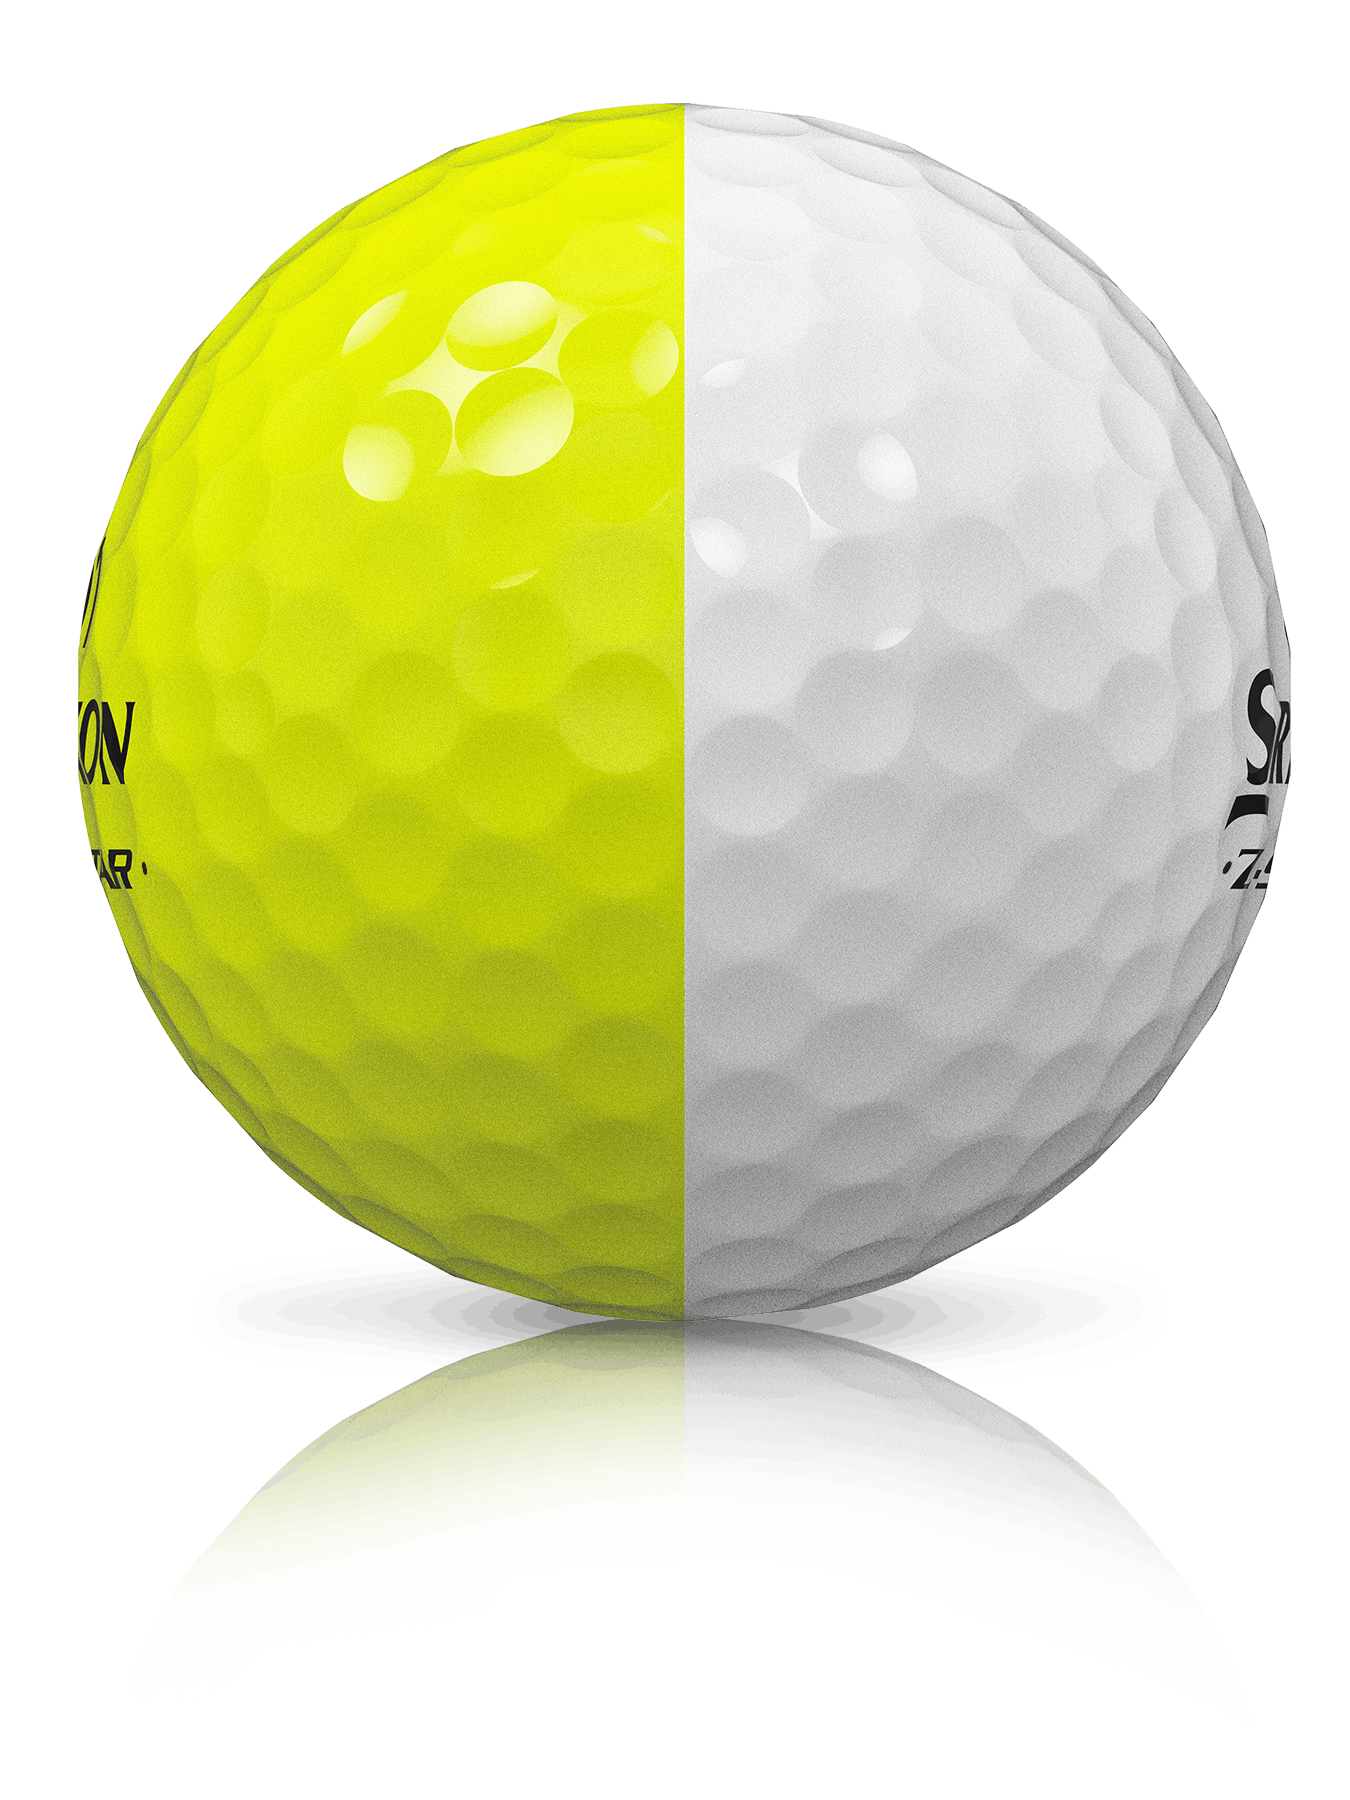 Srixon Z-Star 8 Divide Golf Ball · White/Yellow